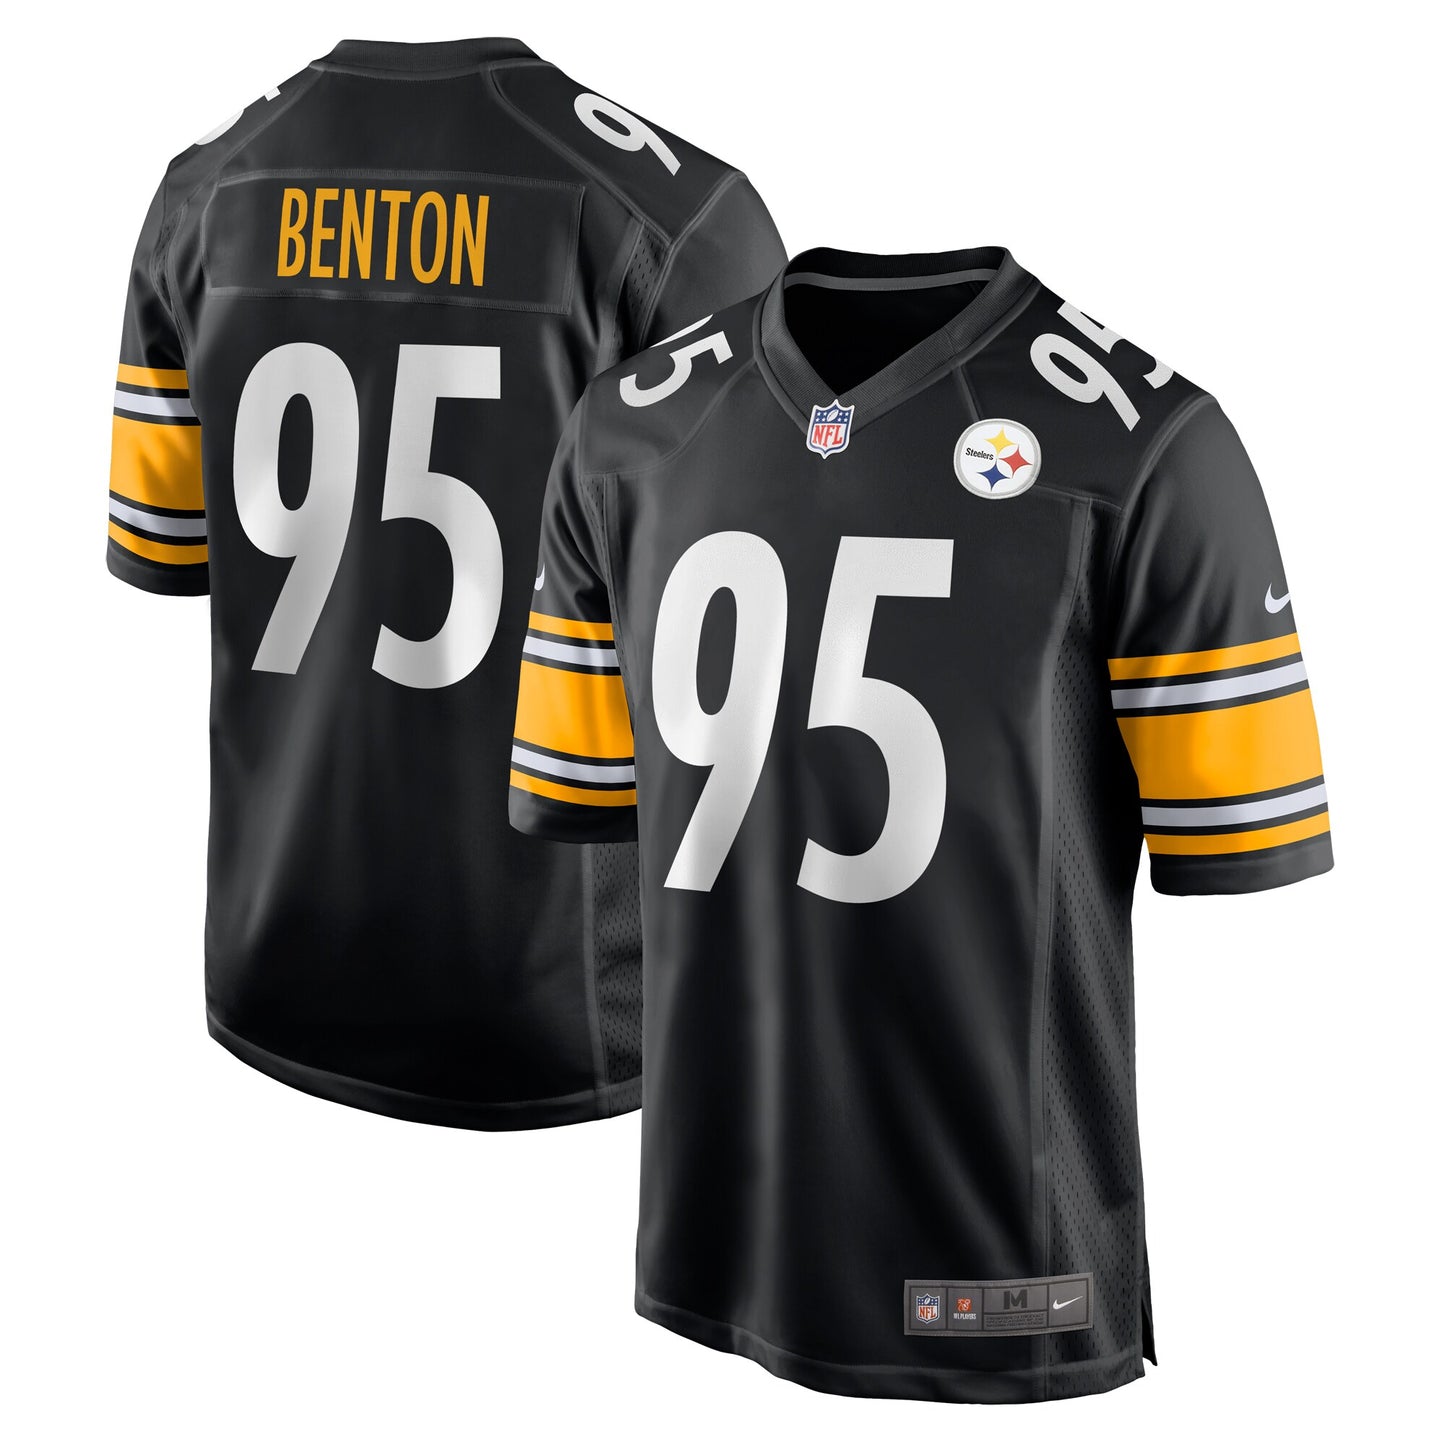 Keeanu Benton Pittsburgh Steelers Nike Team Game Jersey -  Black